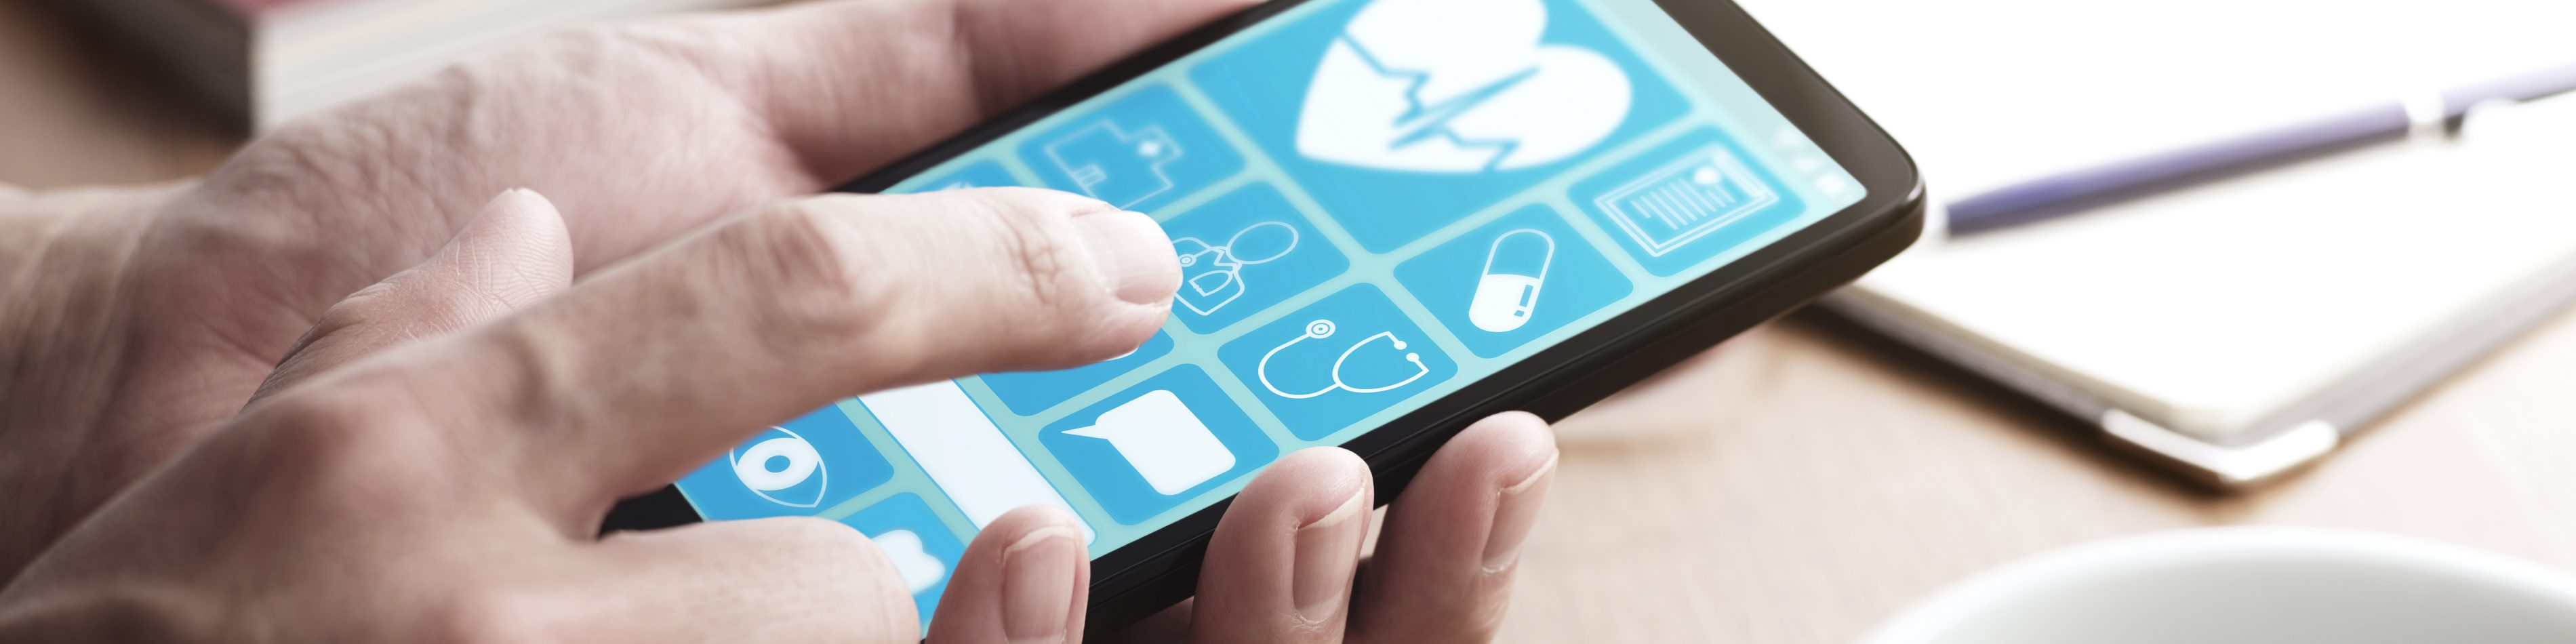 Online healthcare app on smartphone screen. | VIACTIV Krankenkasse